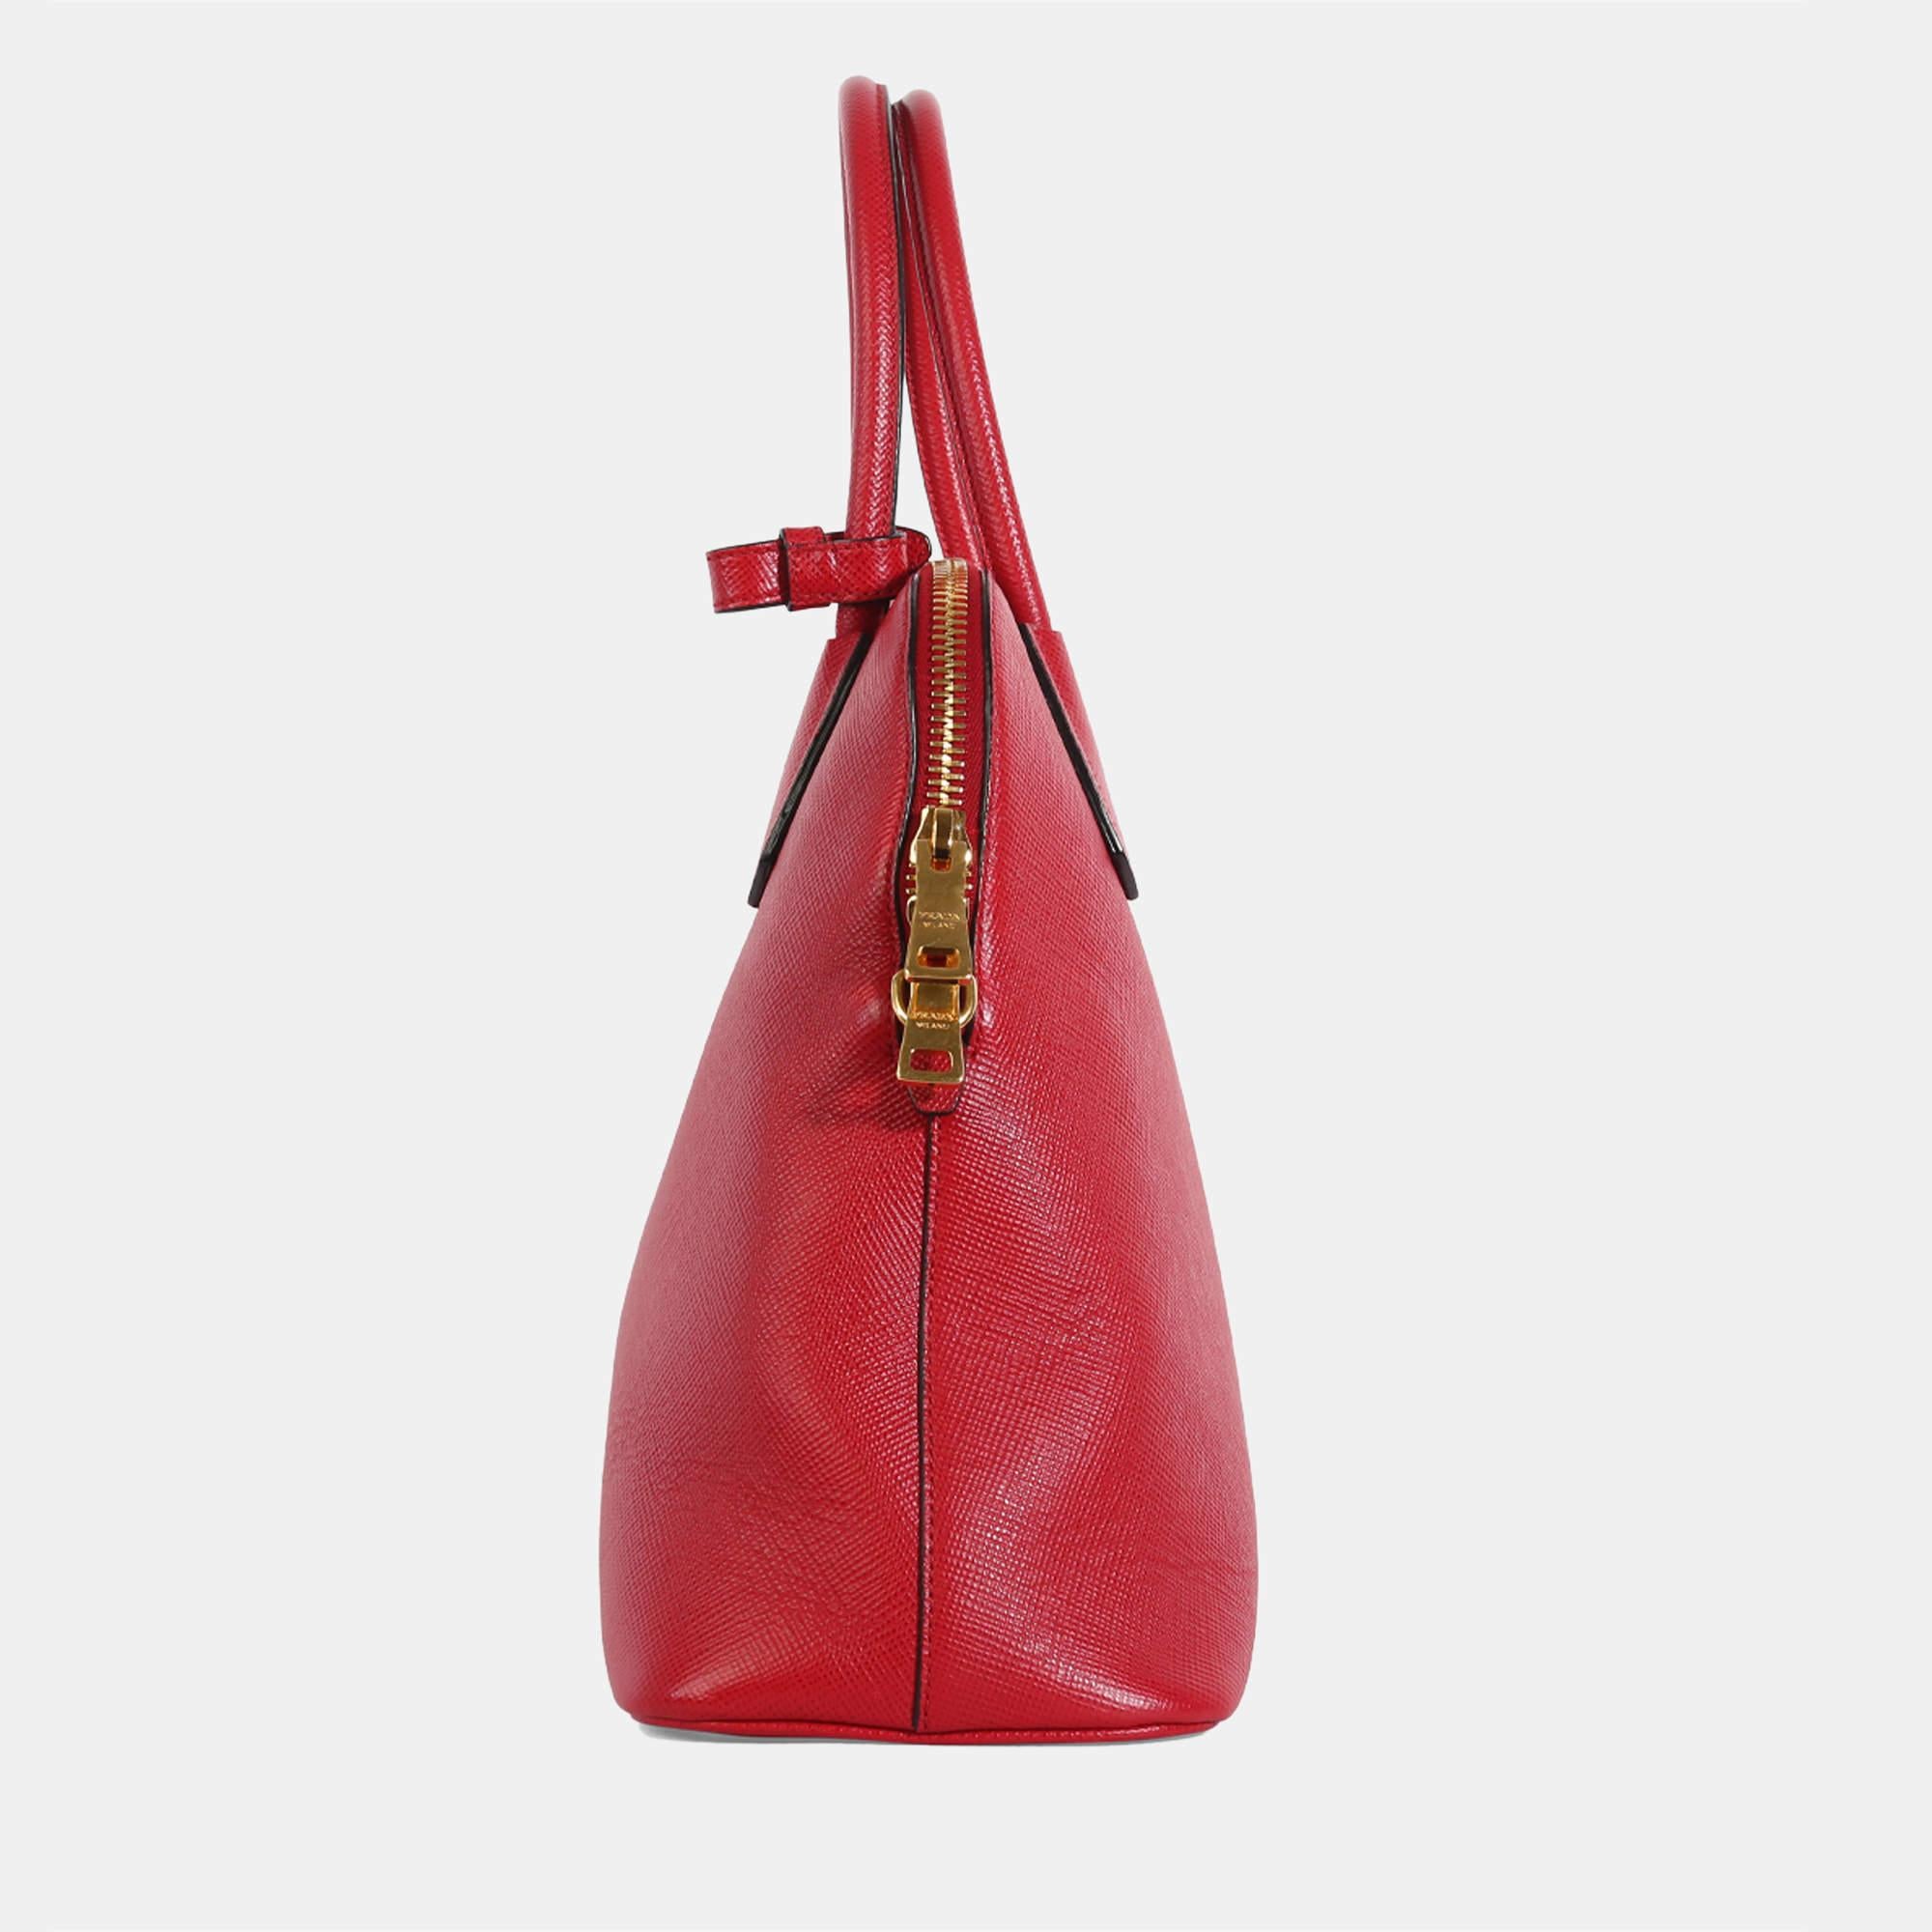 Prada Red Saffiano Leather Medium Dome Satchel Bag For Sale 5